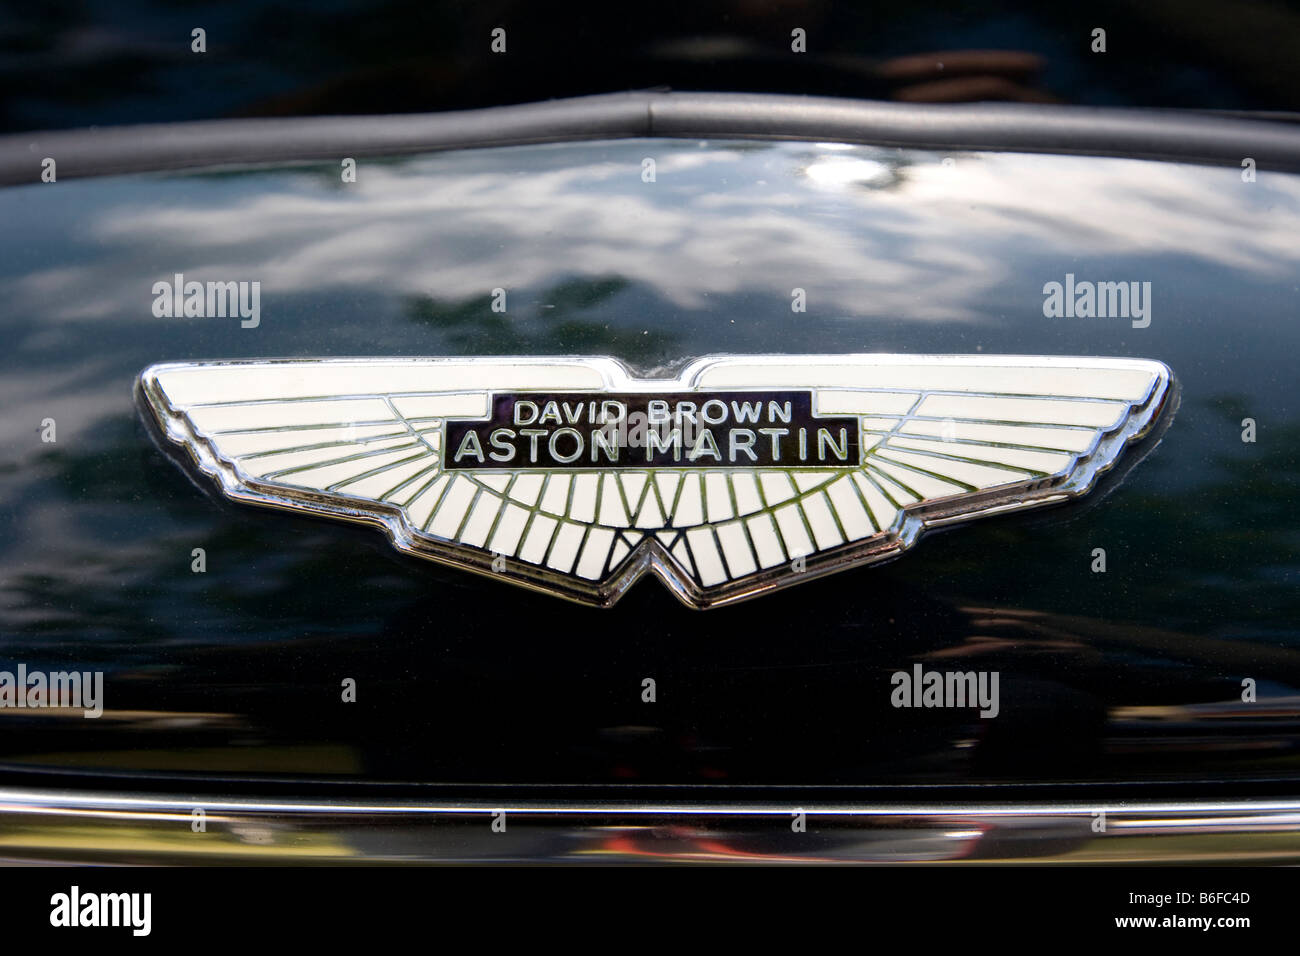 Aston Martin, David Brown, Logo Stock Photo - Alamy